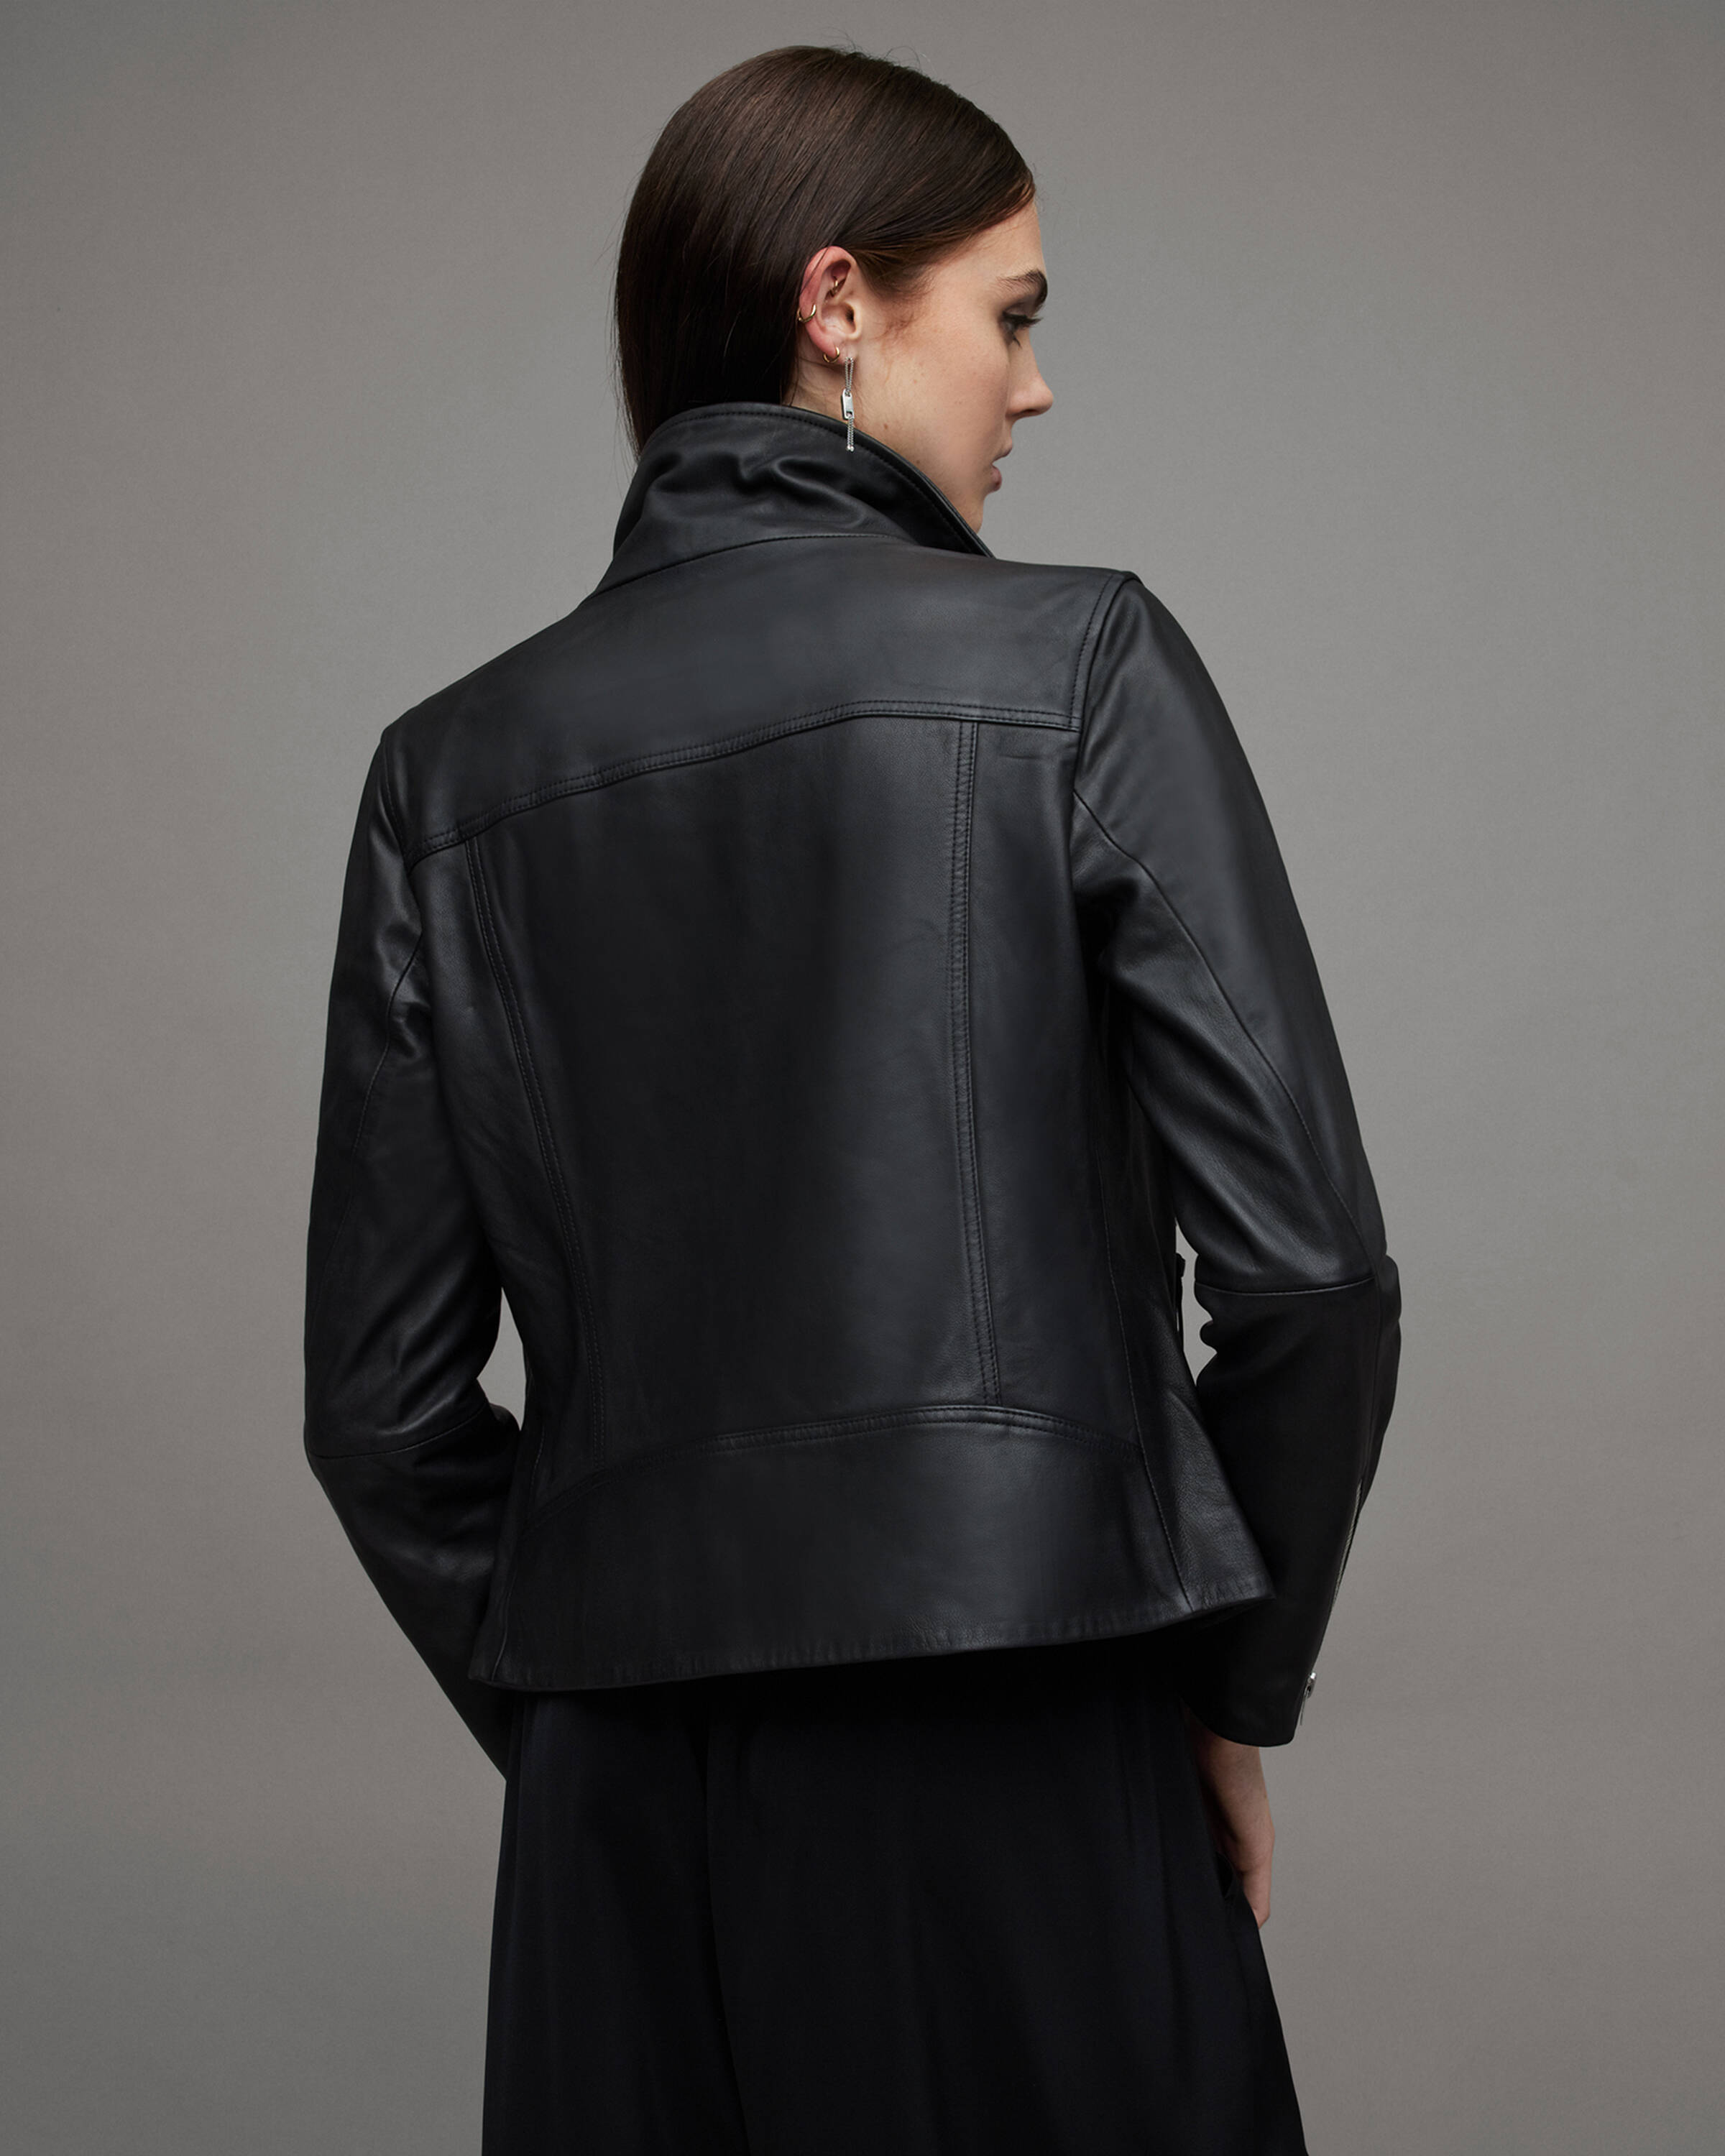 Women's Ellis Leather Jacket - Back View